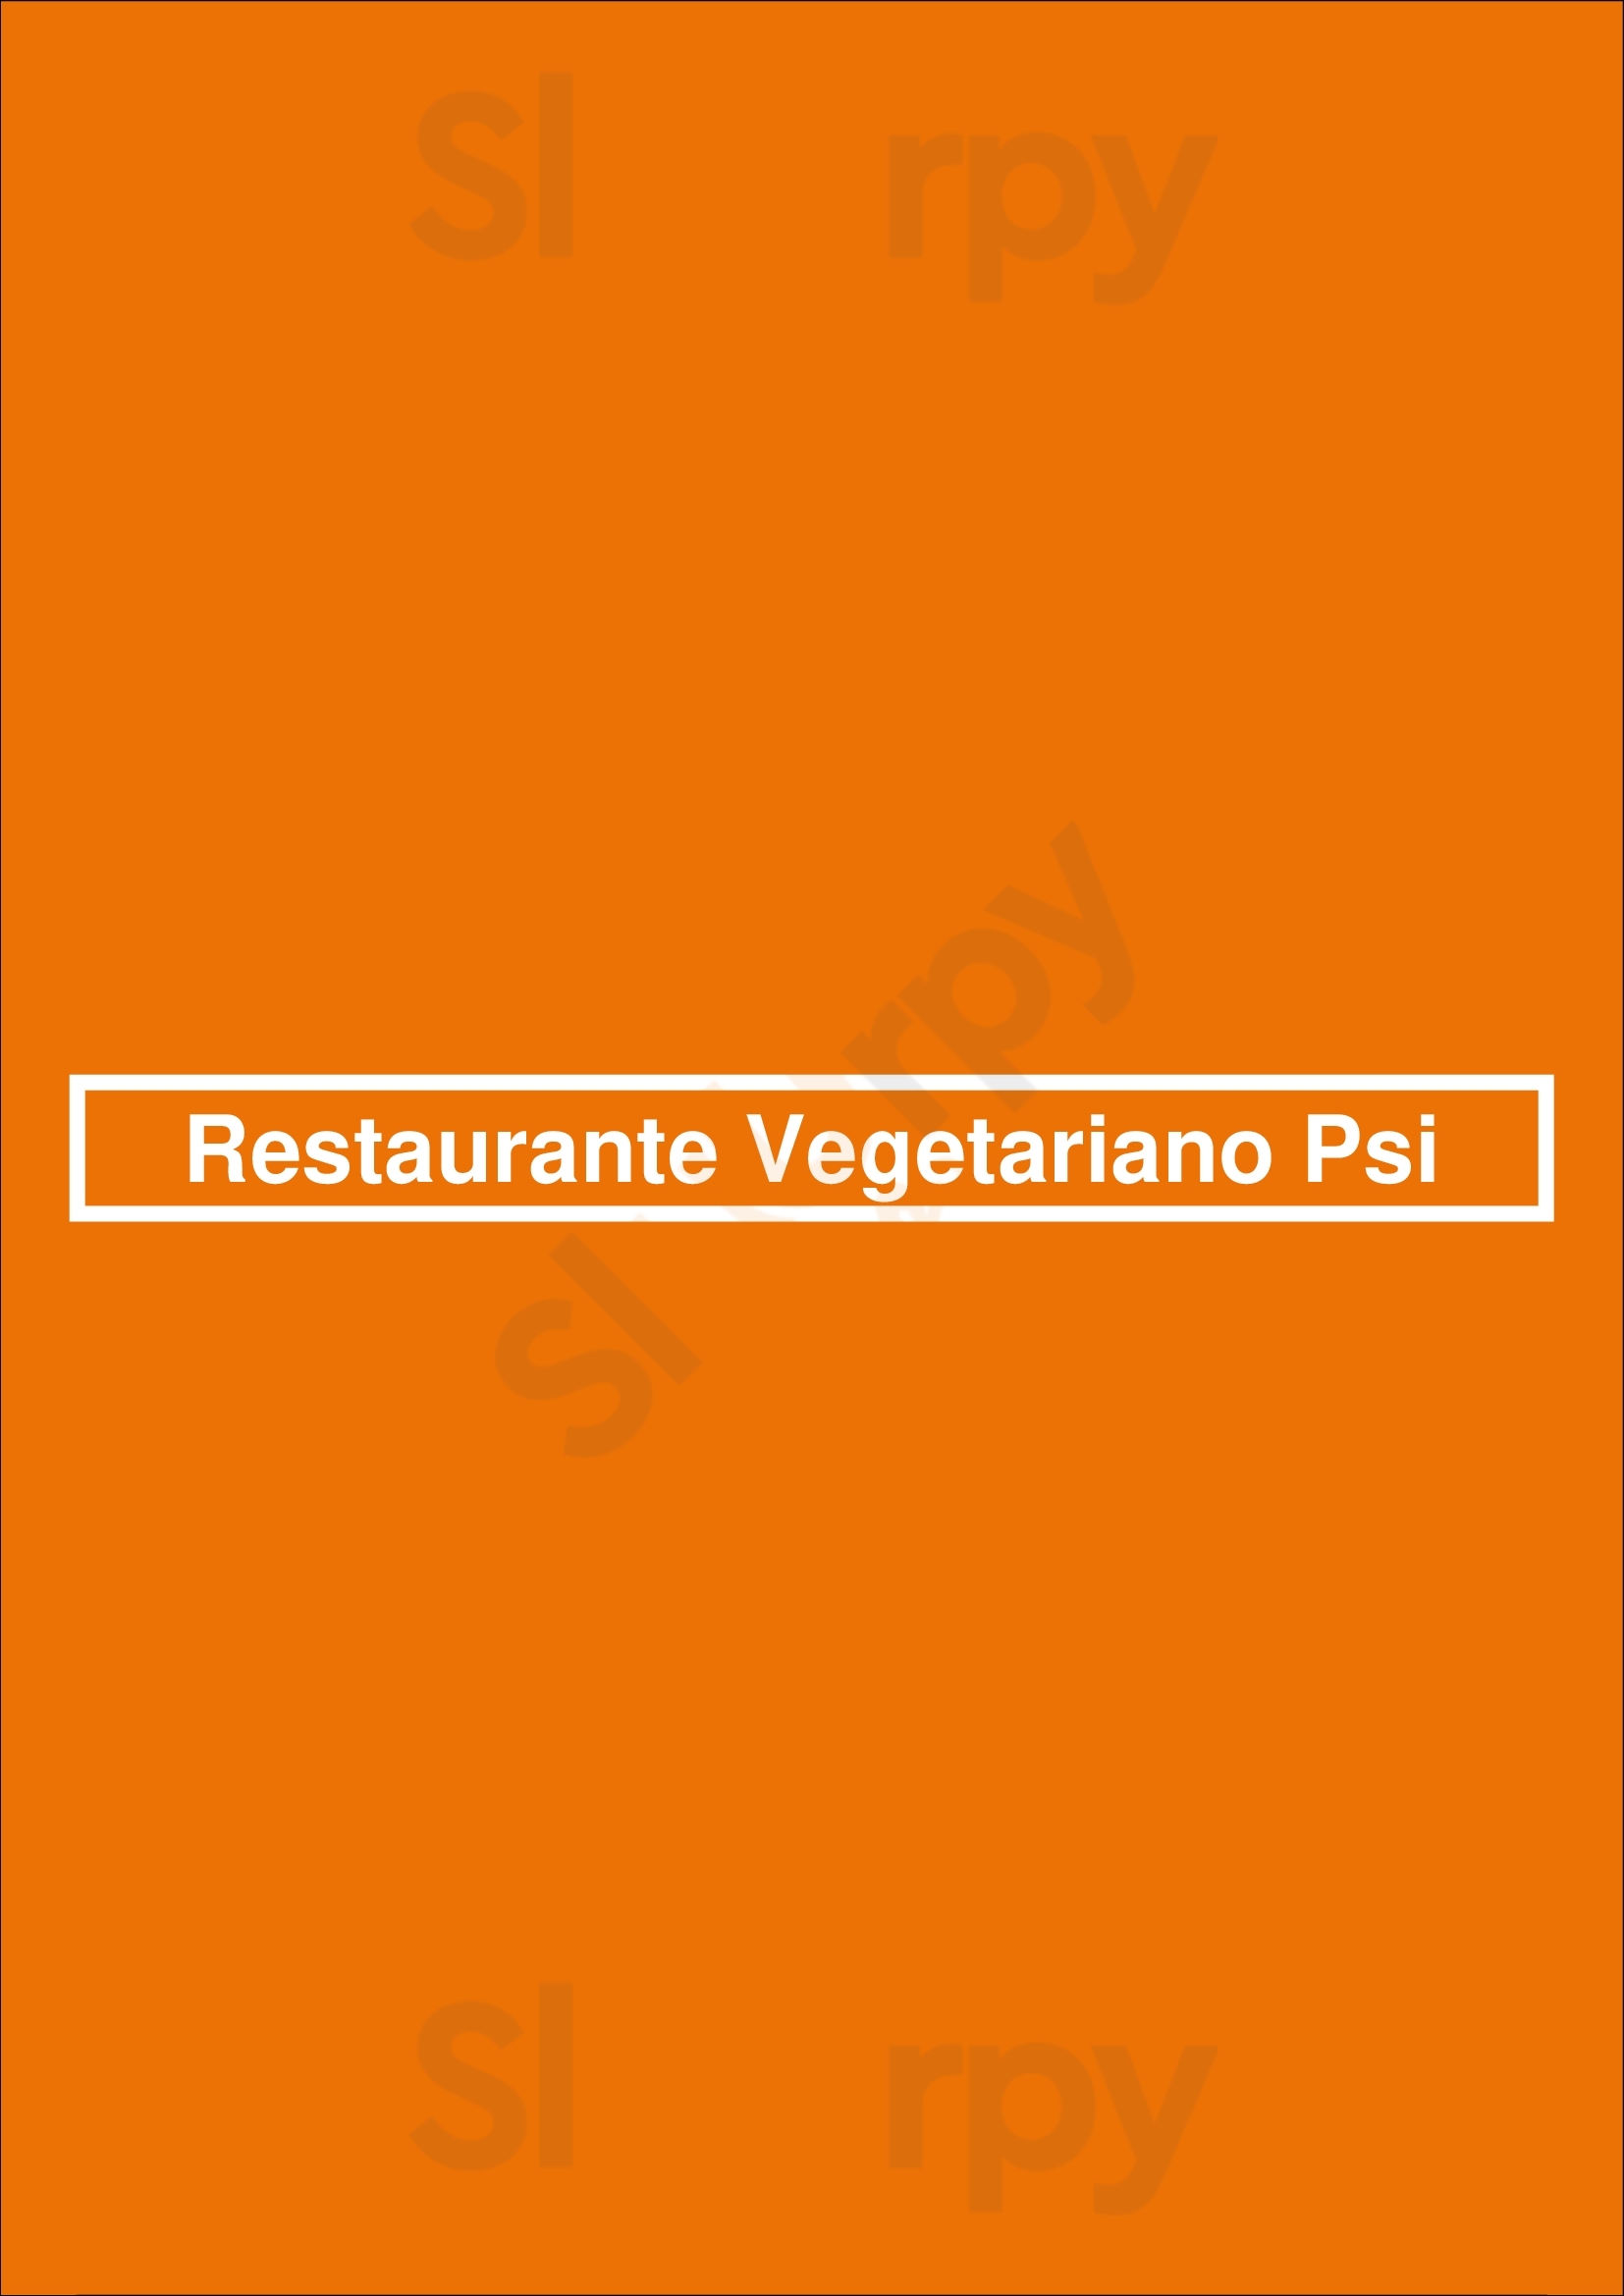 Restaurante Vegetariano Psi Lisboa Menu - 1